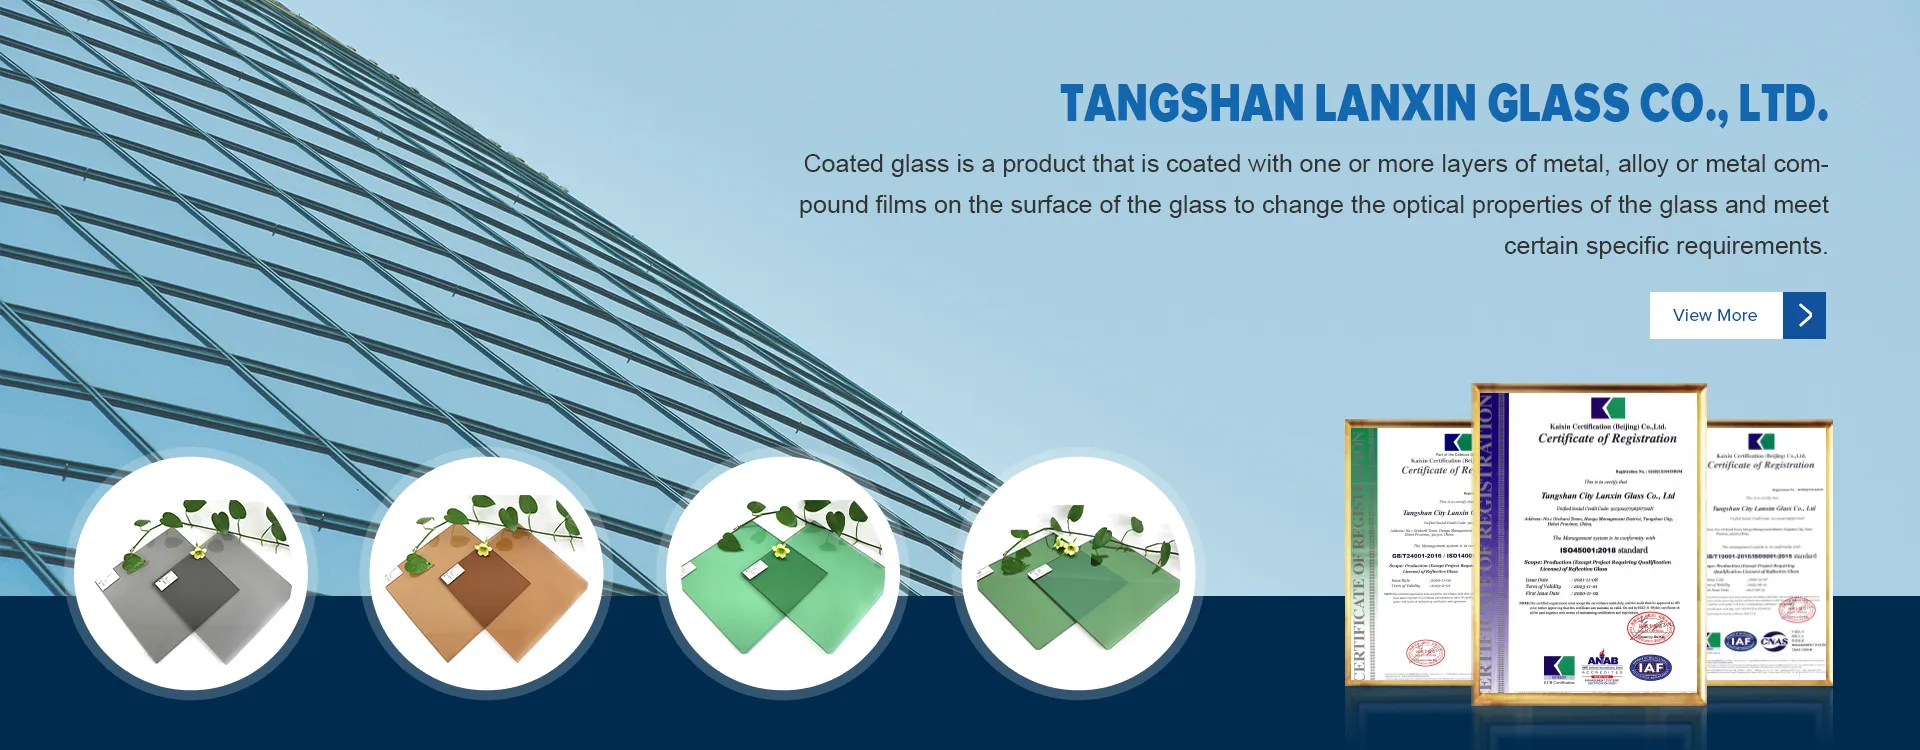 Tangshan Lanxin Glass Co., Ltd.